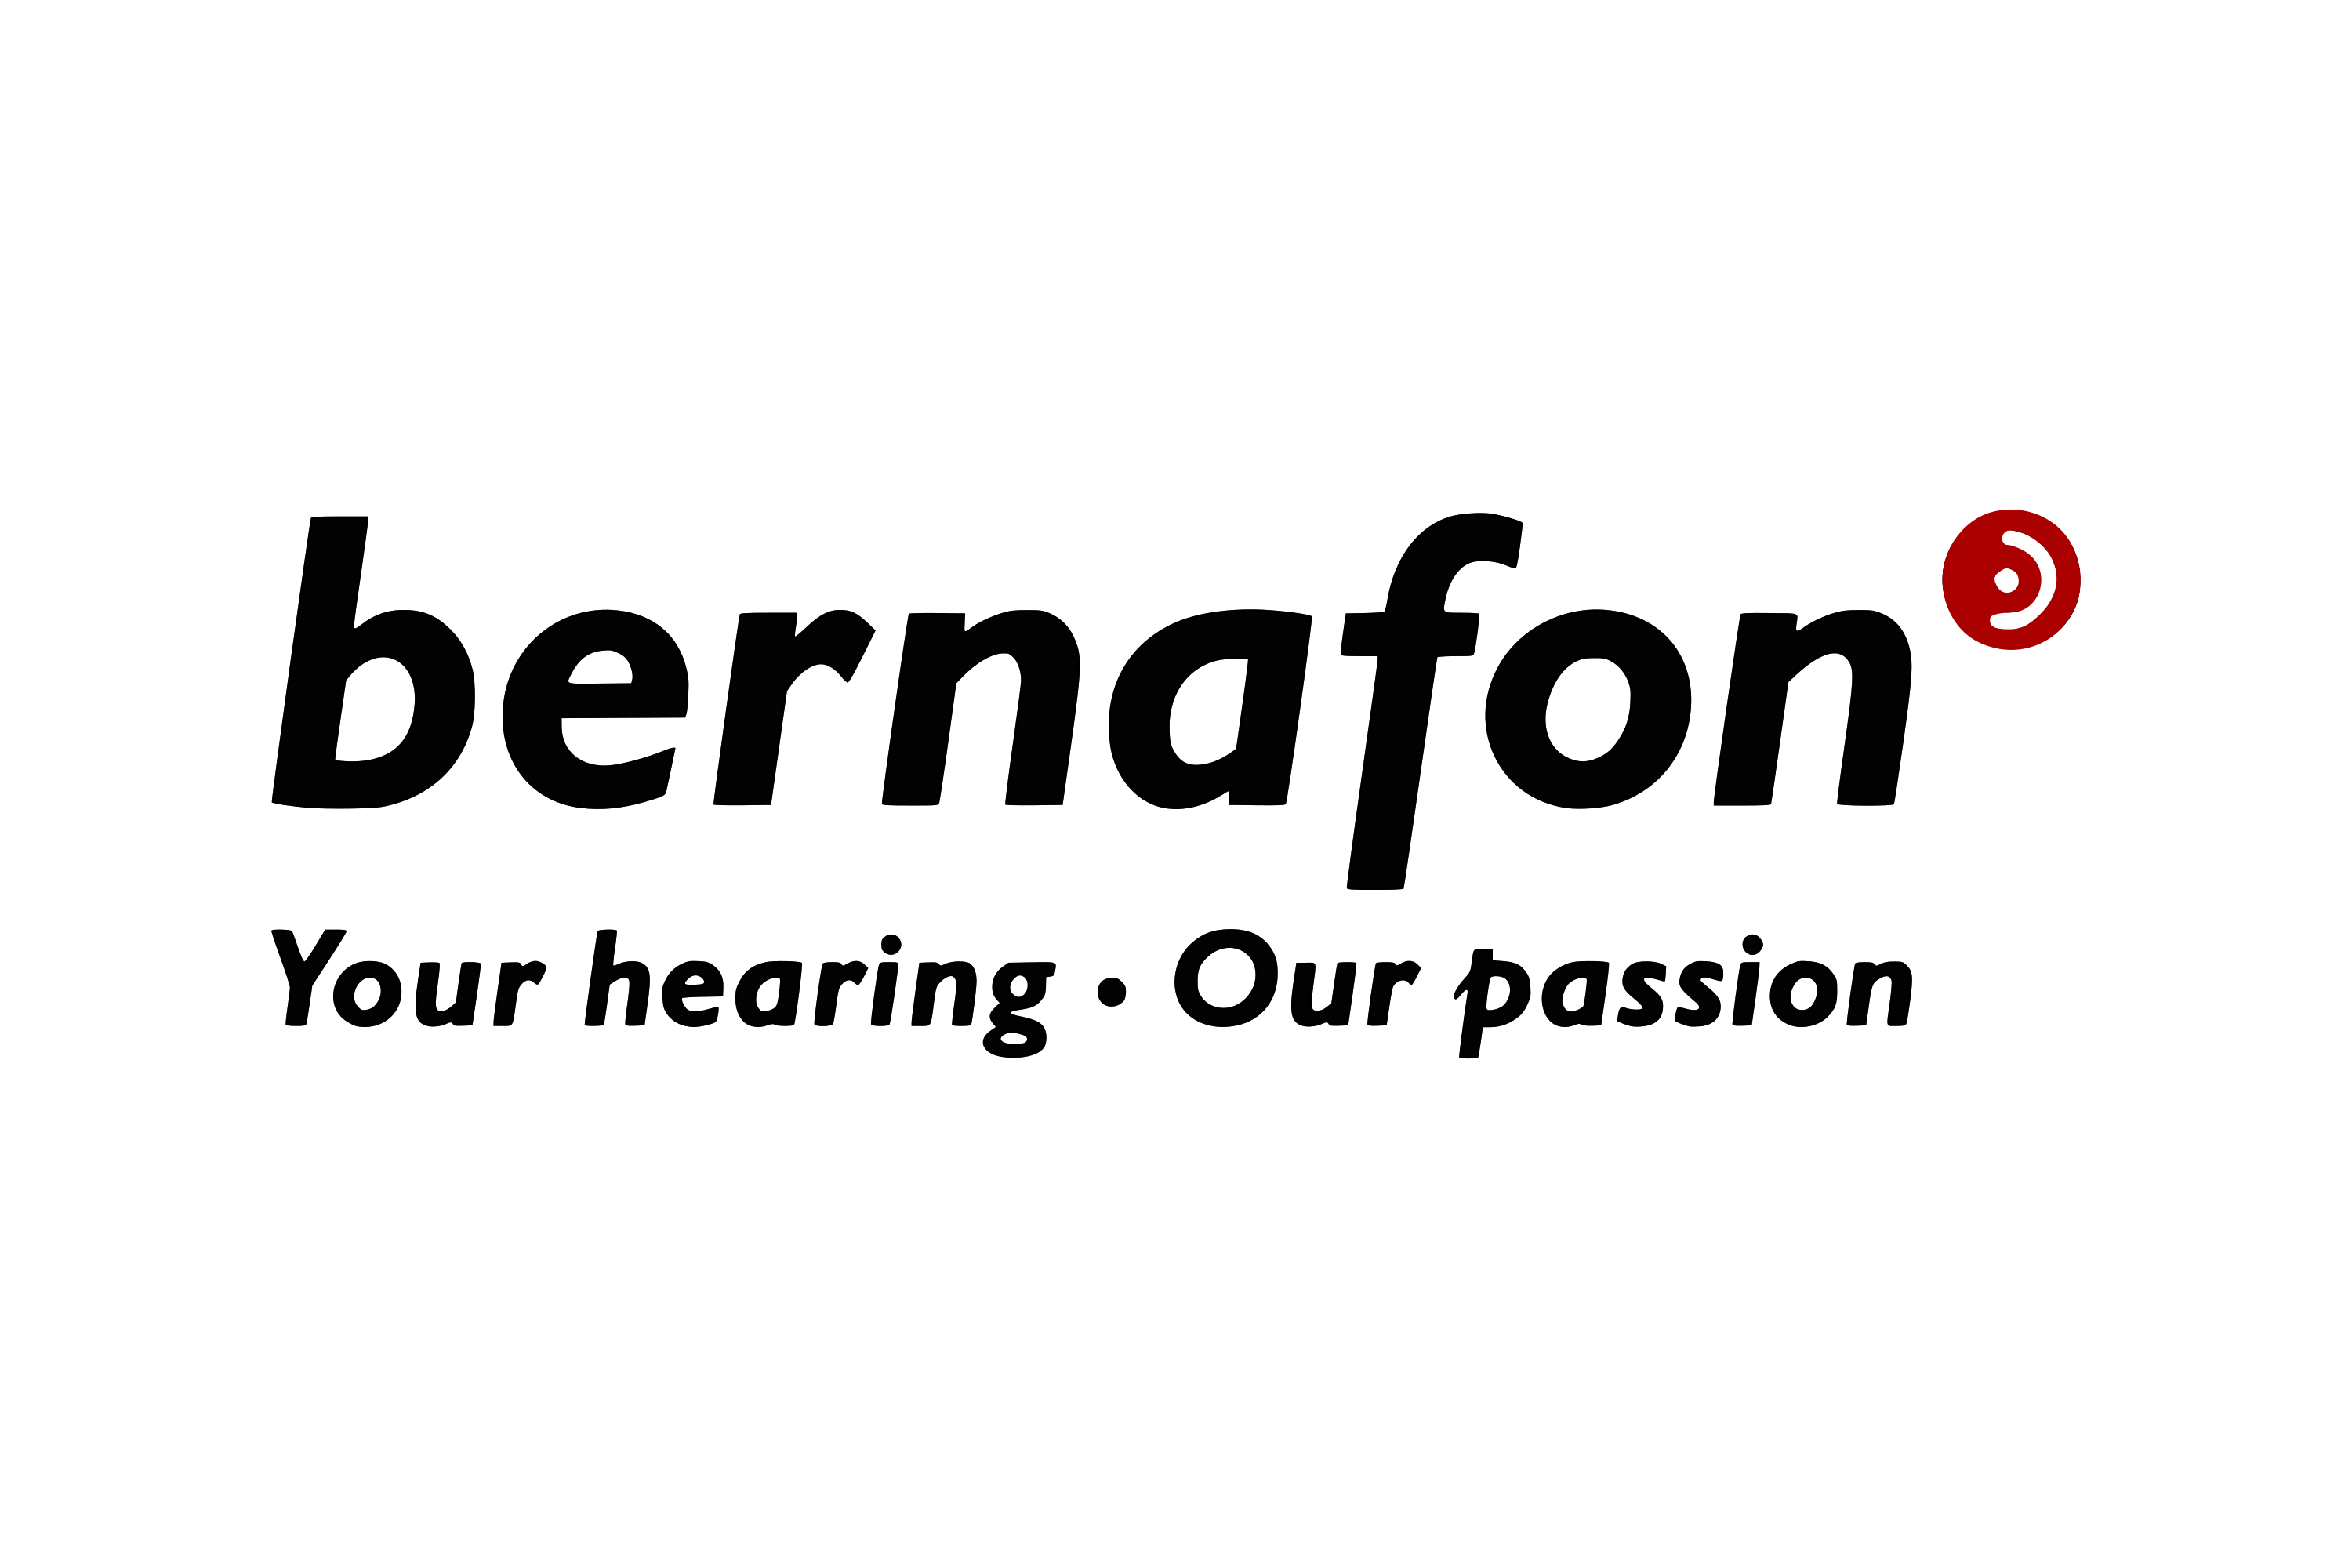 Bernafon Logo